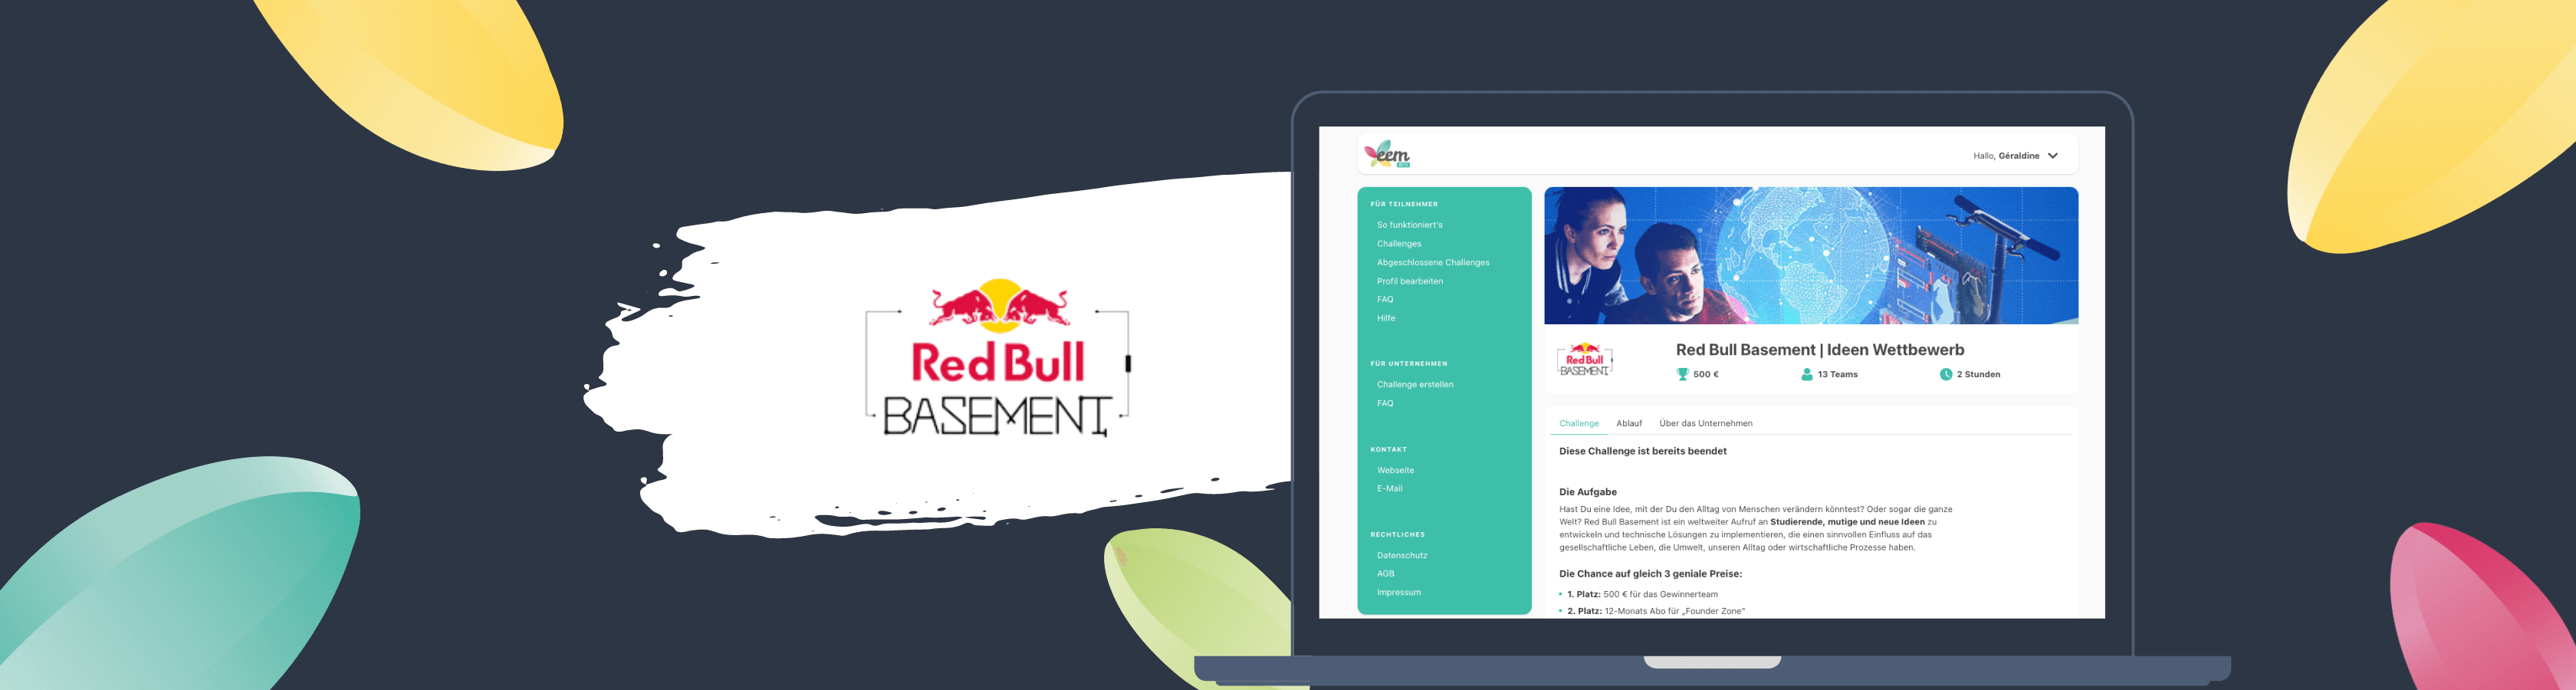 Red Bull Basement Ideenwettbewerb auf Xeem